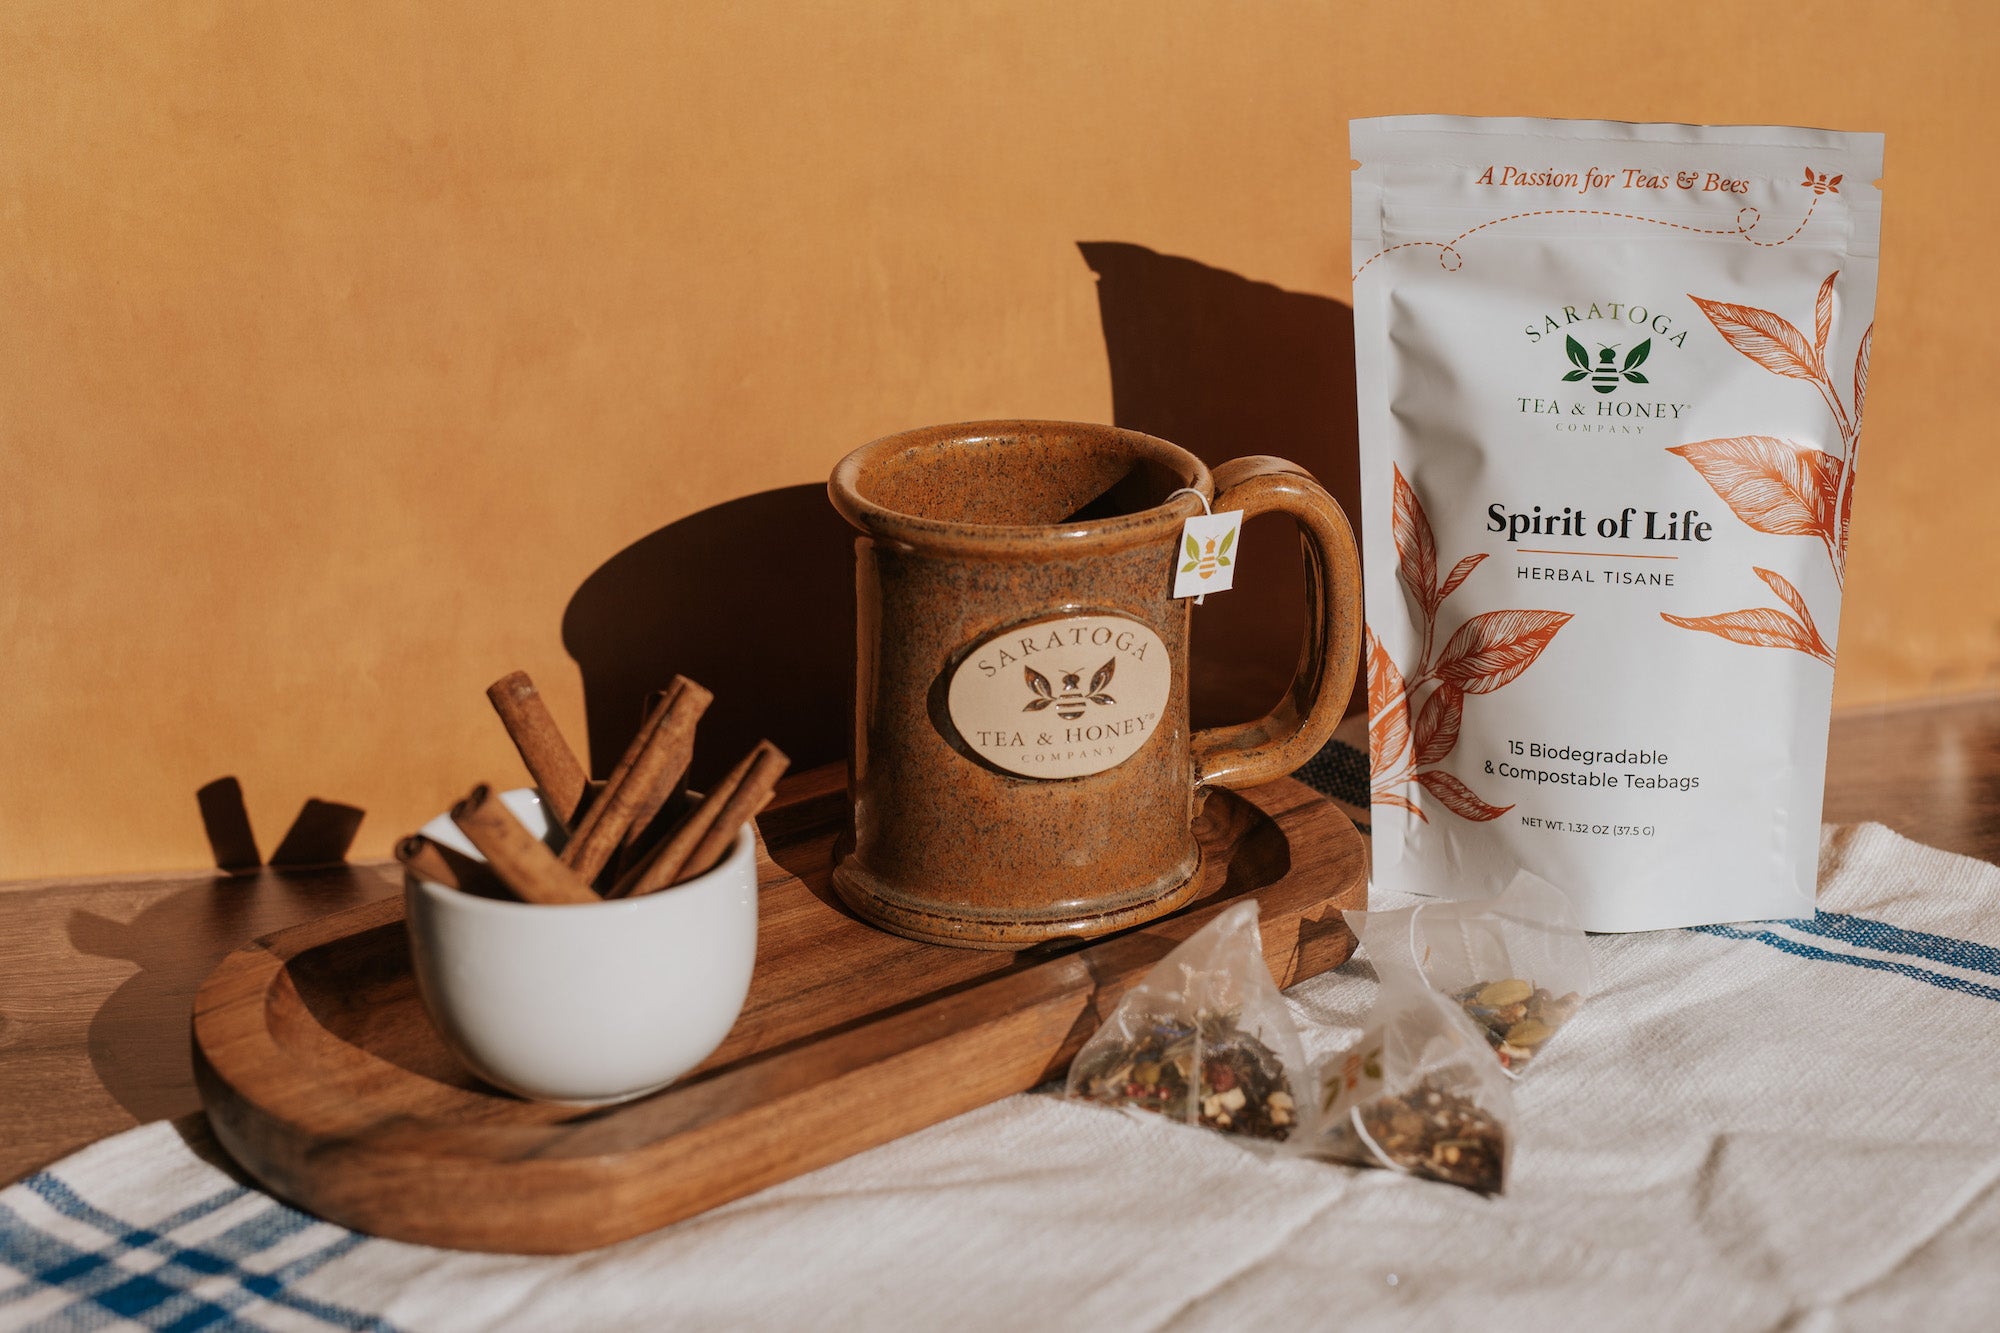 spirit of life citrus and spice herbal tisane tea sachets next to brown saratoga tea and honey co stoneware bee mug